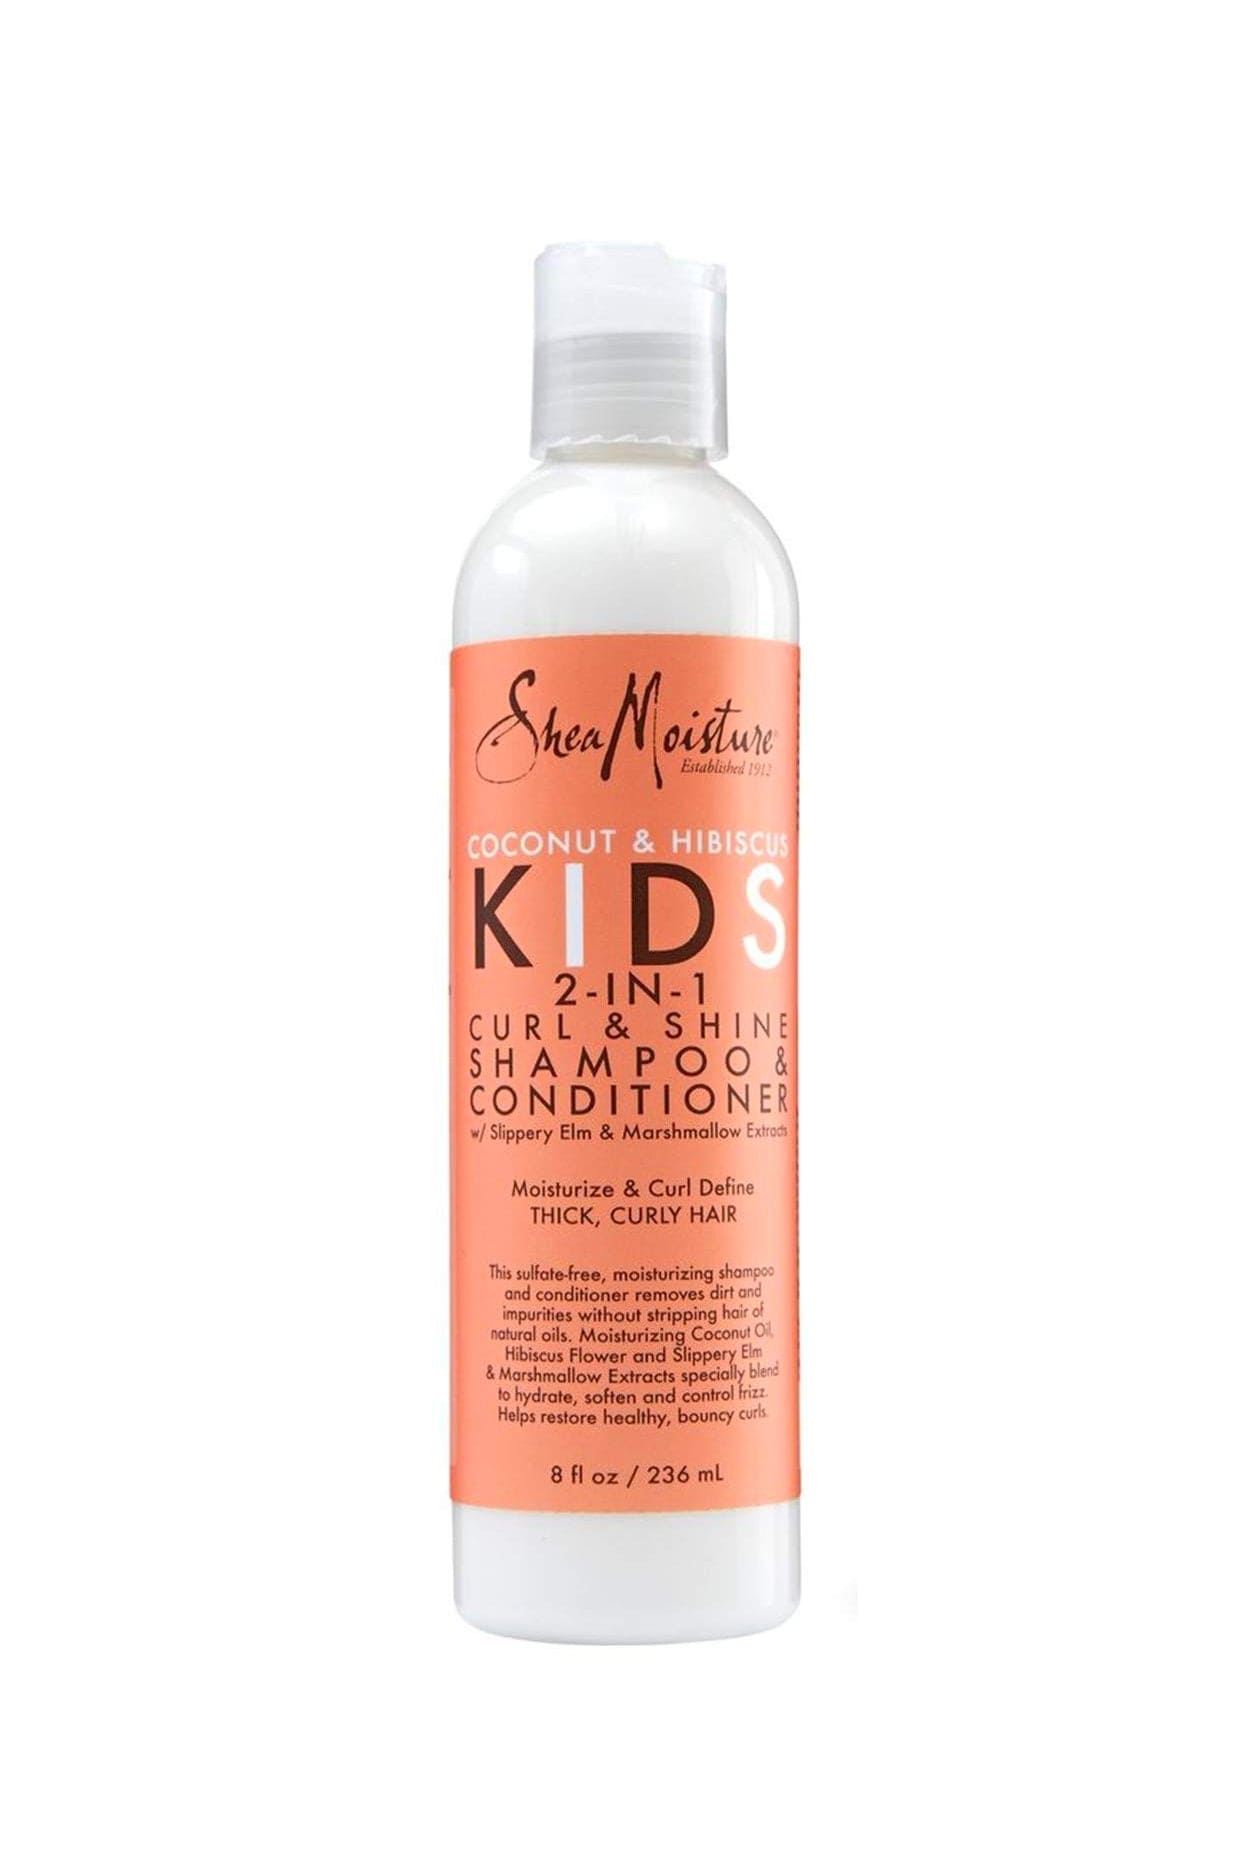 Shea Moisture Kids - Kids 2 In 1 Coconut & Hibiscus Revitalizing Shampoo (Curl & Shine) 236ml - Shea Moisture - Ethni Beauty Market